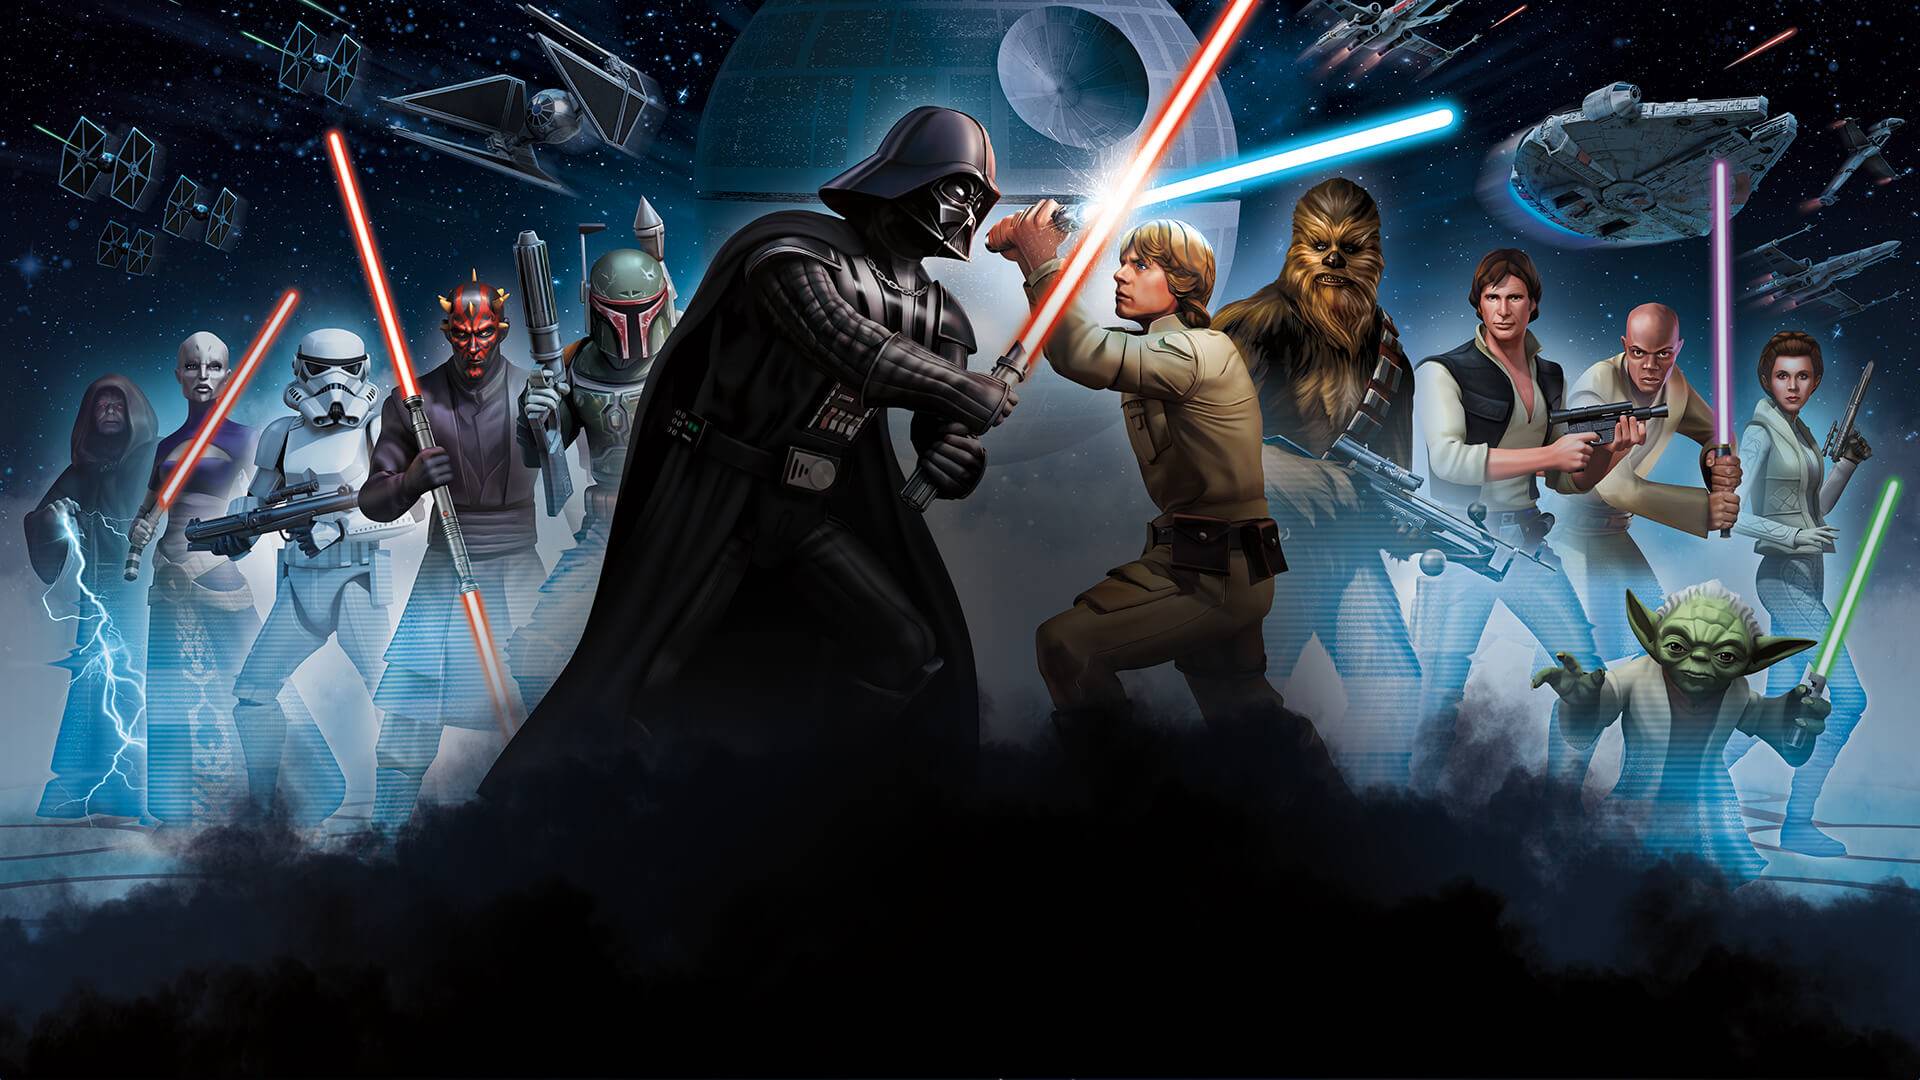 Spada laser azzurra Star Wars adulto Anakin Skywalker ufficiale Disney